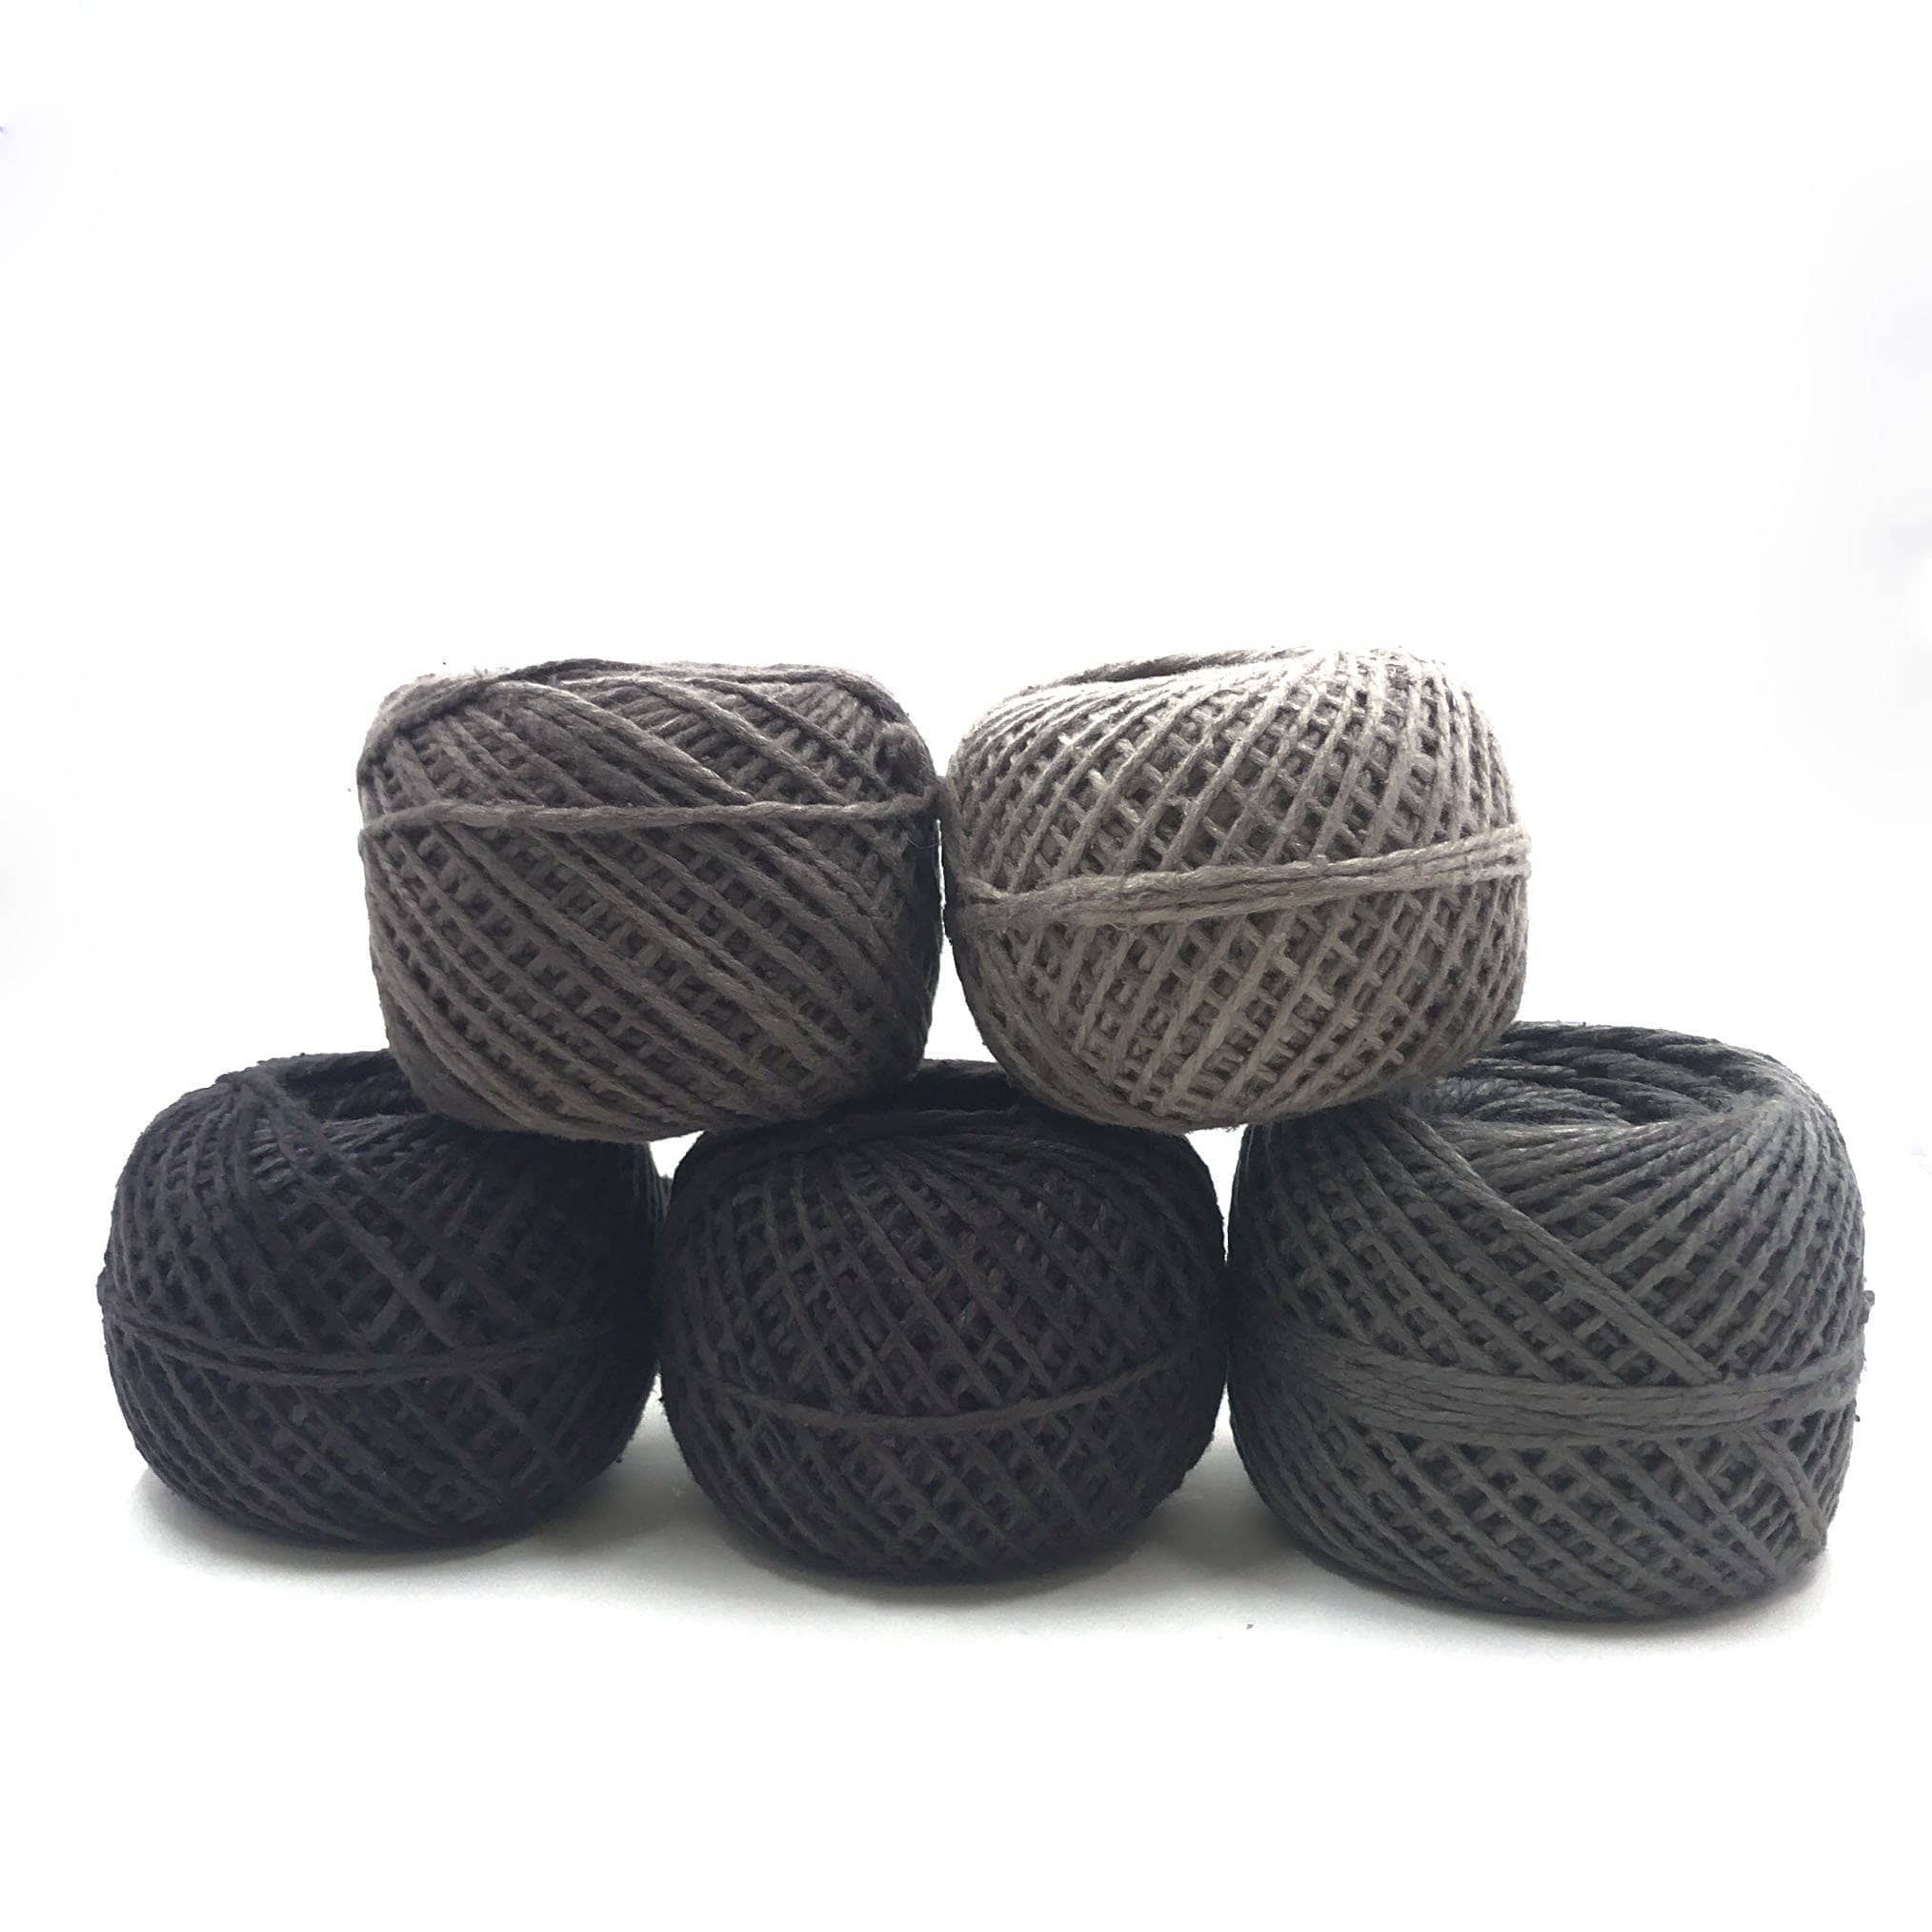 PLUS Size Bev Hills Black Crochet Bralette Tank Top - Gabriel